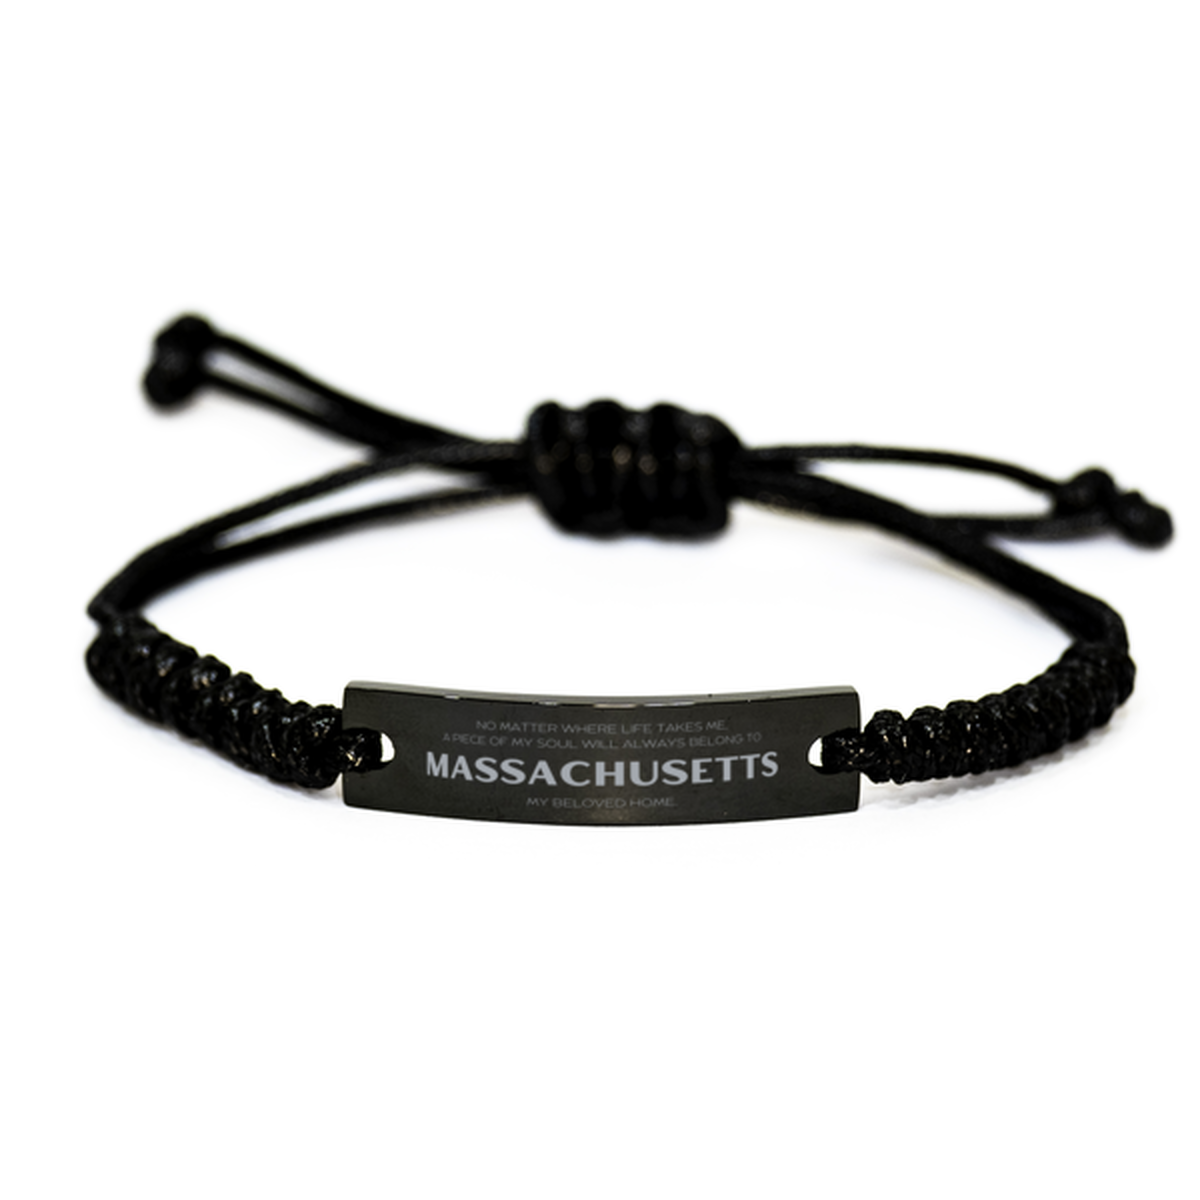 Love Massachusetts State Gifts, My soul will always belong to Massachusetts, Proud Black Rope Bracelet, Birthday Unique Gifts For Massachusetts Men, Women, Friends